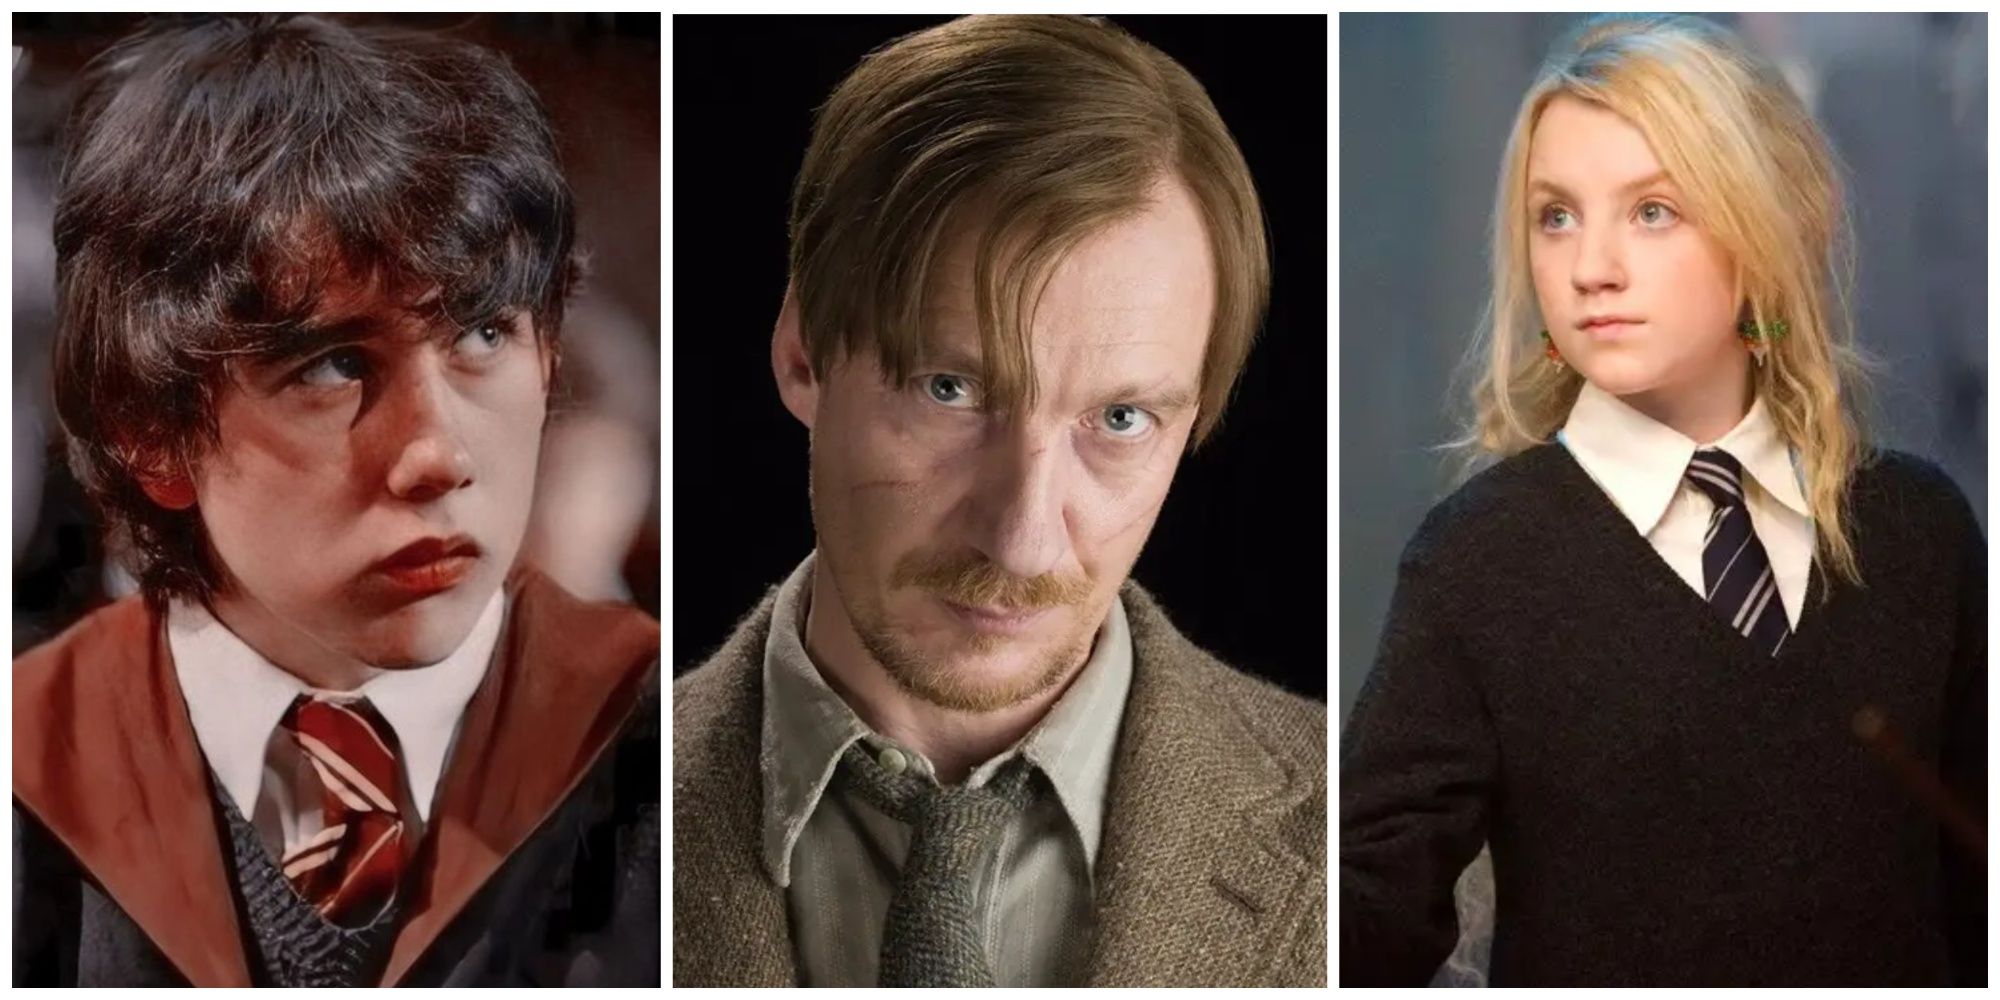 Matthew Lewis as Neville Longbottom. David Thewlis as Remus Lupin. Evannah Lynch as Luna Lovegood.